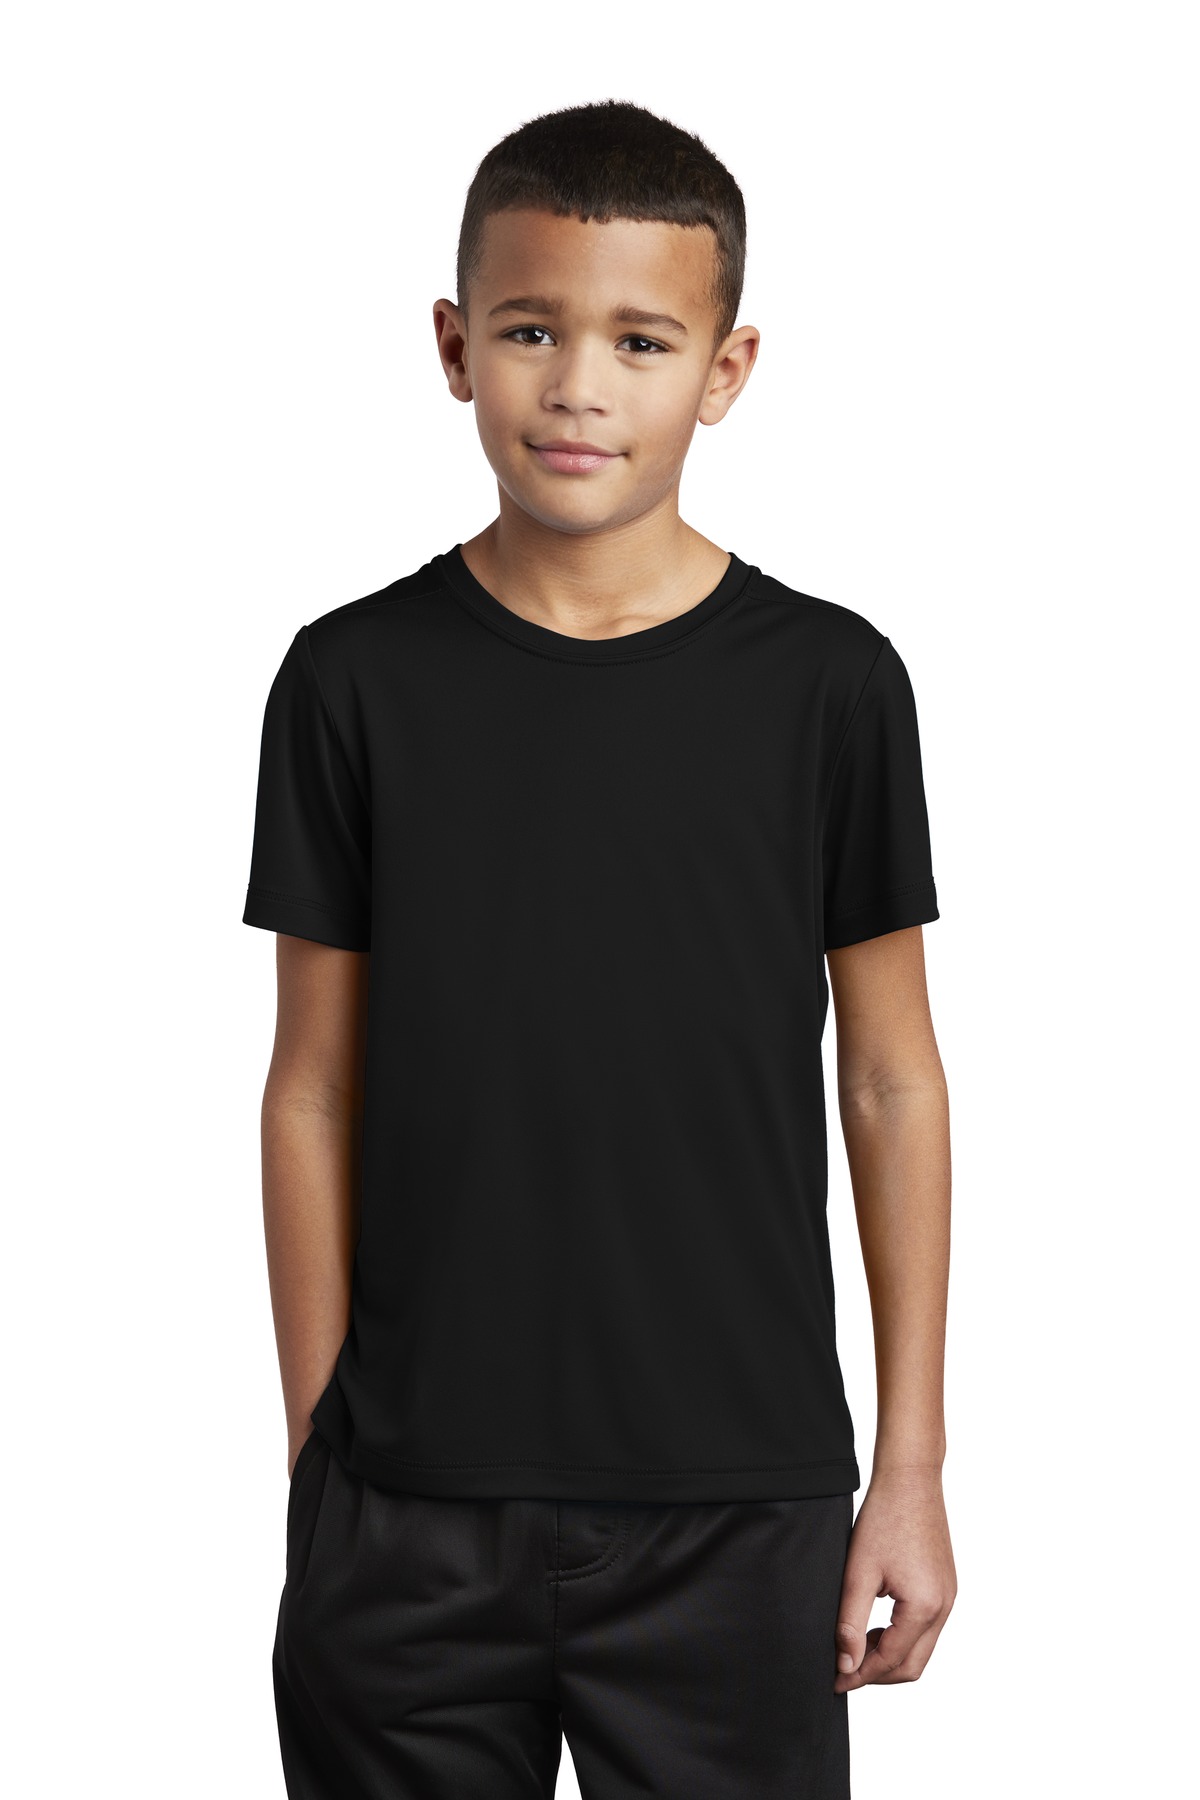 Sport-Tek Activewear Youth T-Shirts for Hospitality ® Youth Posi-UV Pro Tee.-Sport-Tek